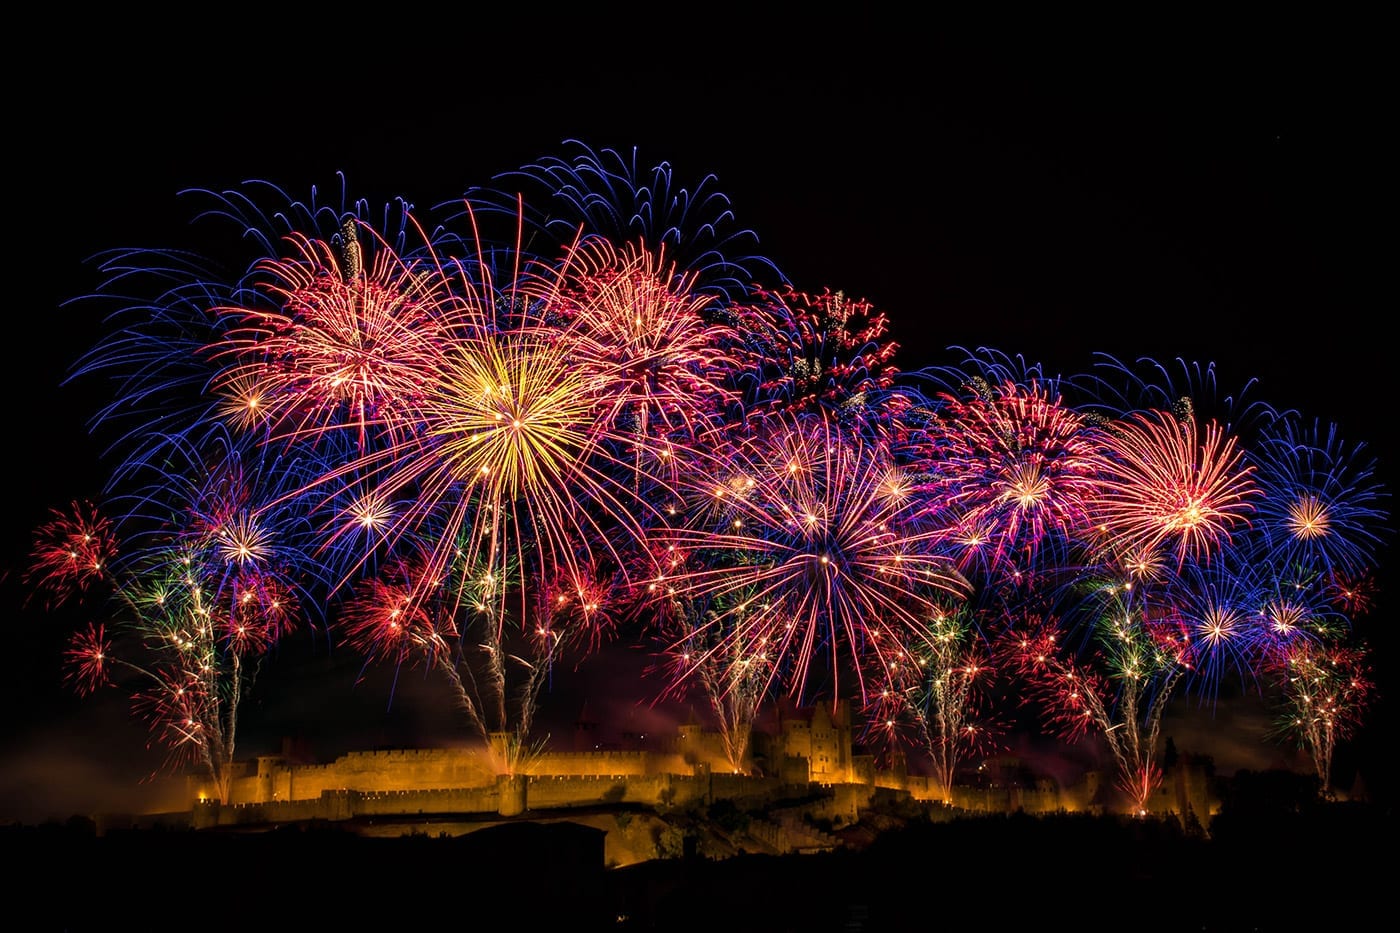 How to Photograph Fireworks Like A Pro